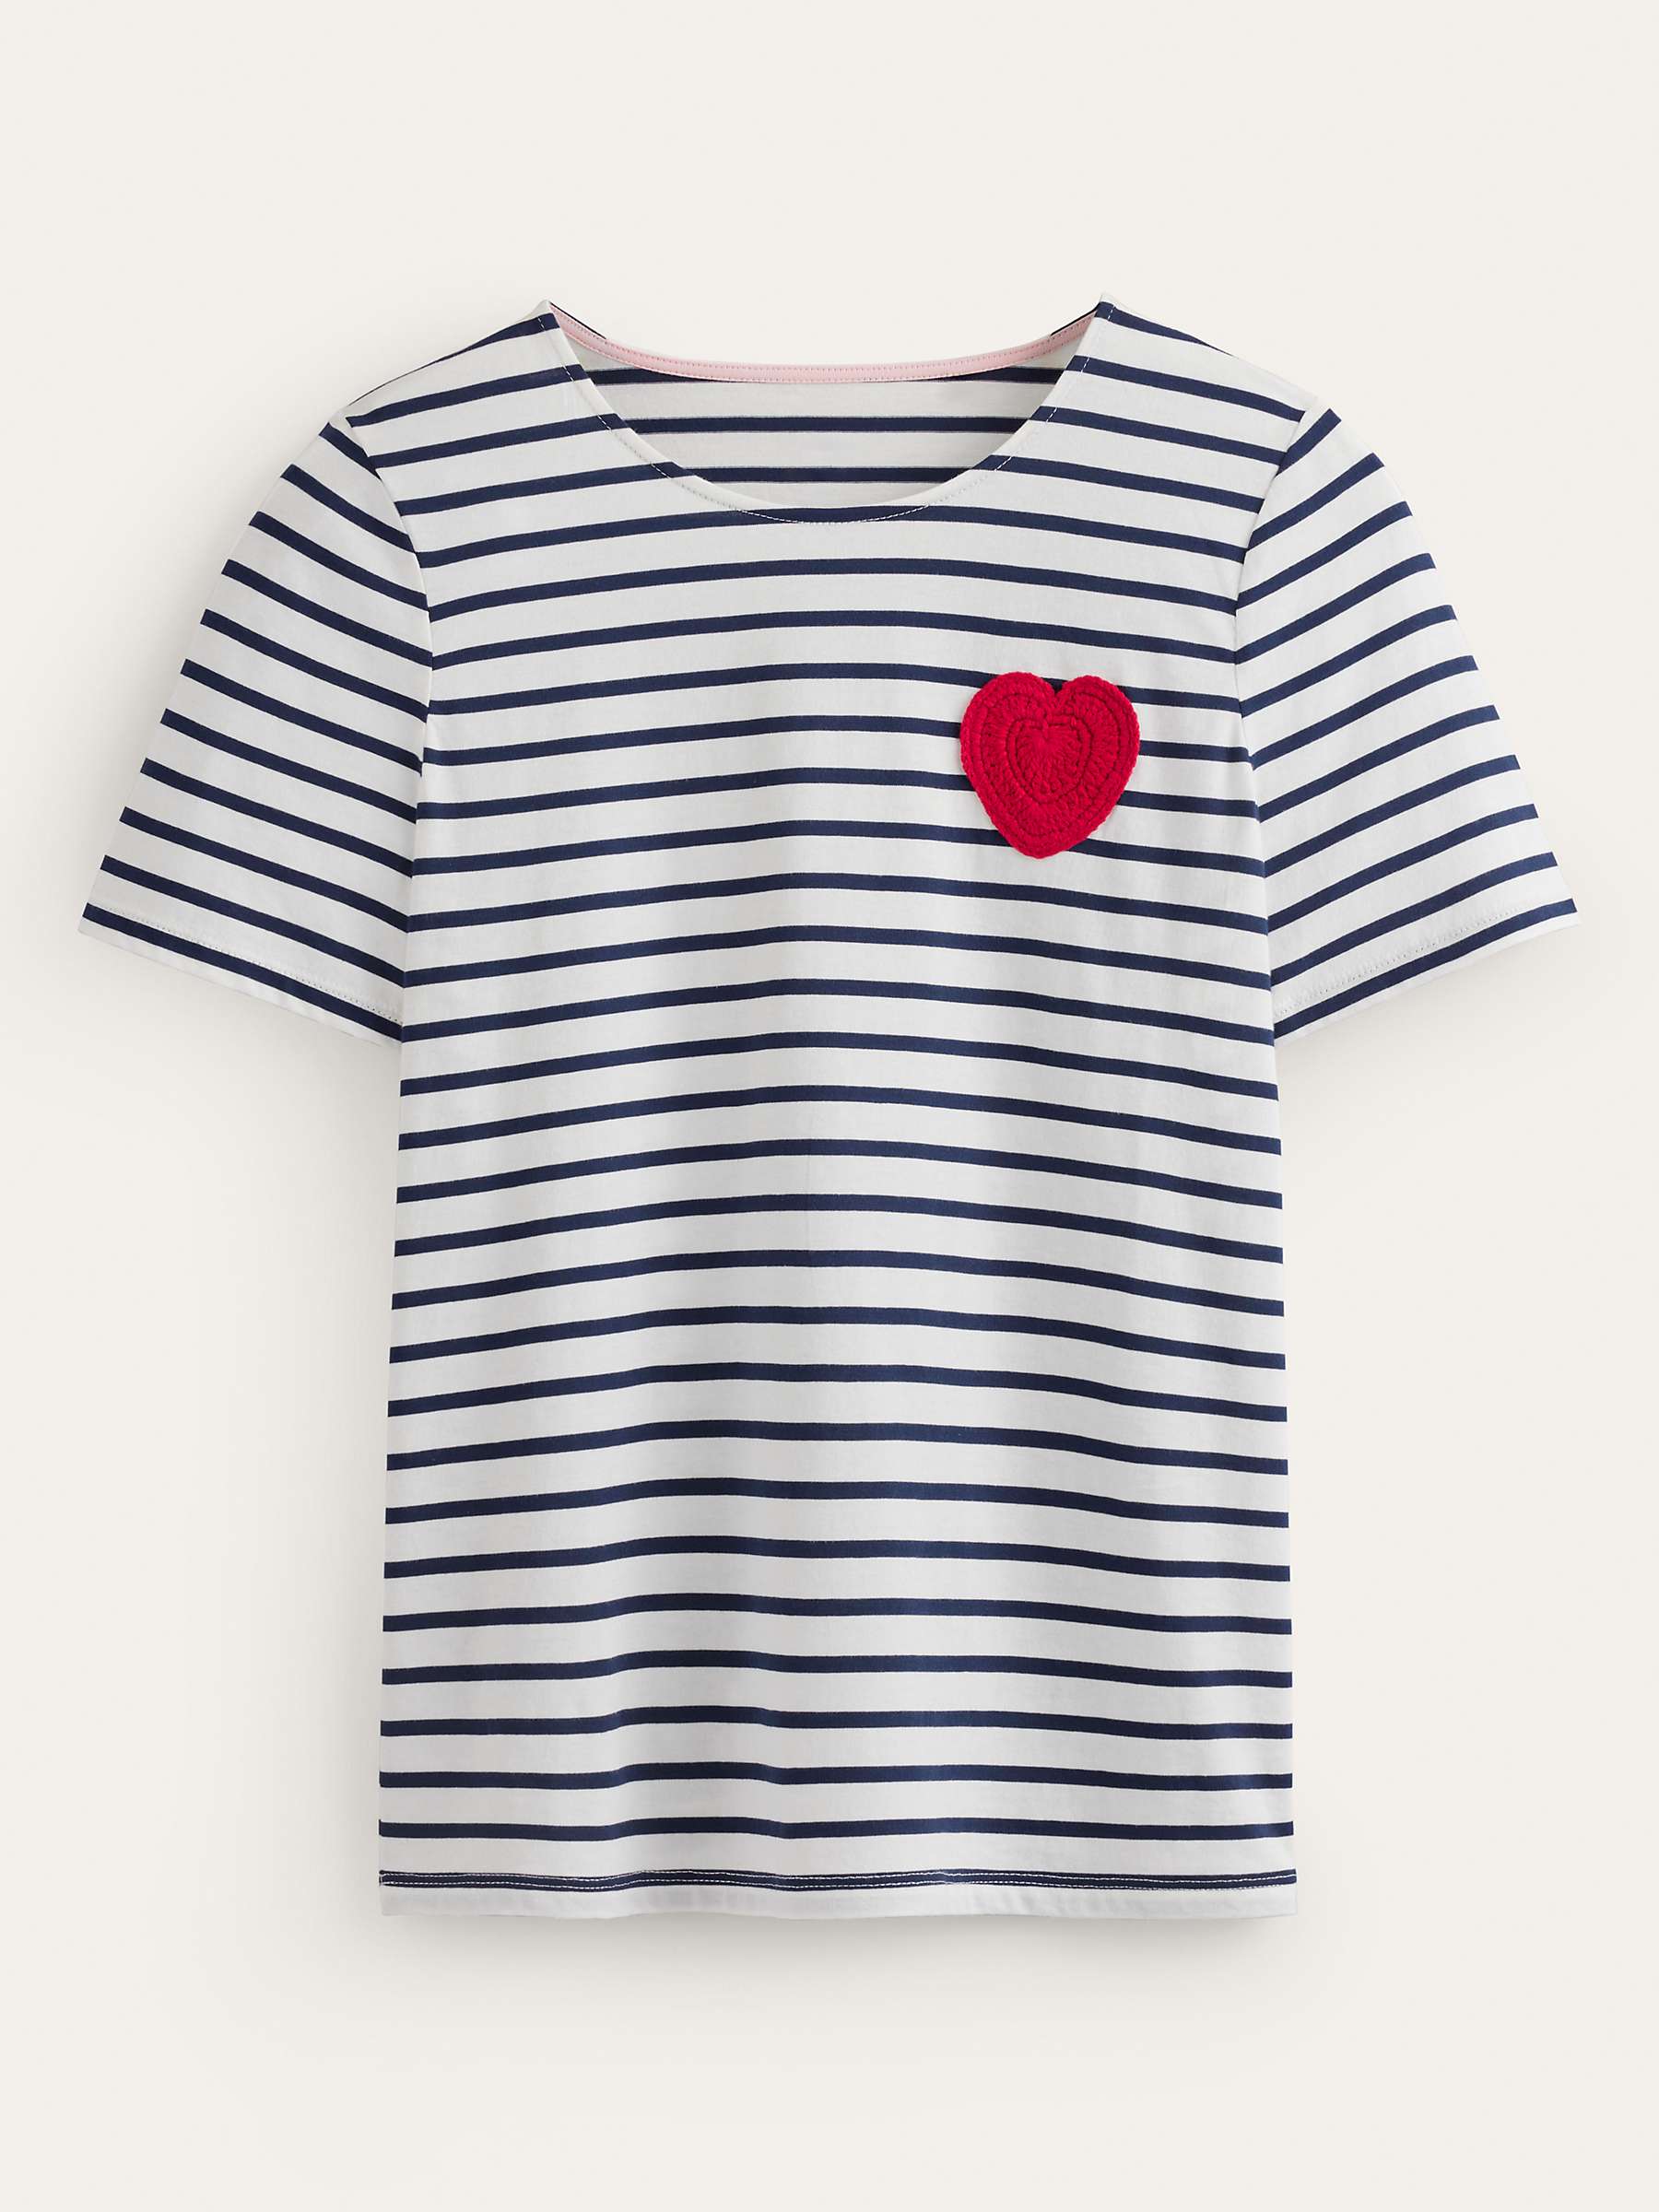 Boden Crochet Heart Stripe T-Shirt, Ivory/Navy at John Lewis & Partners